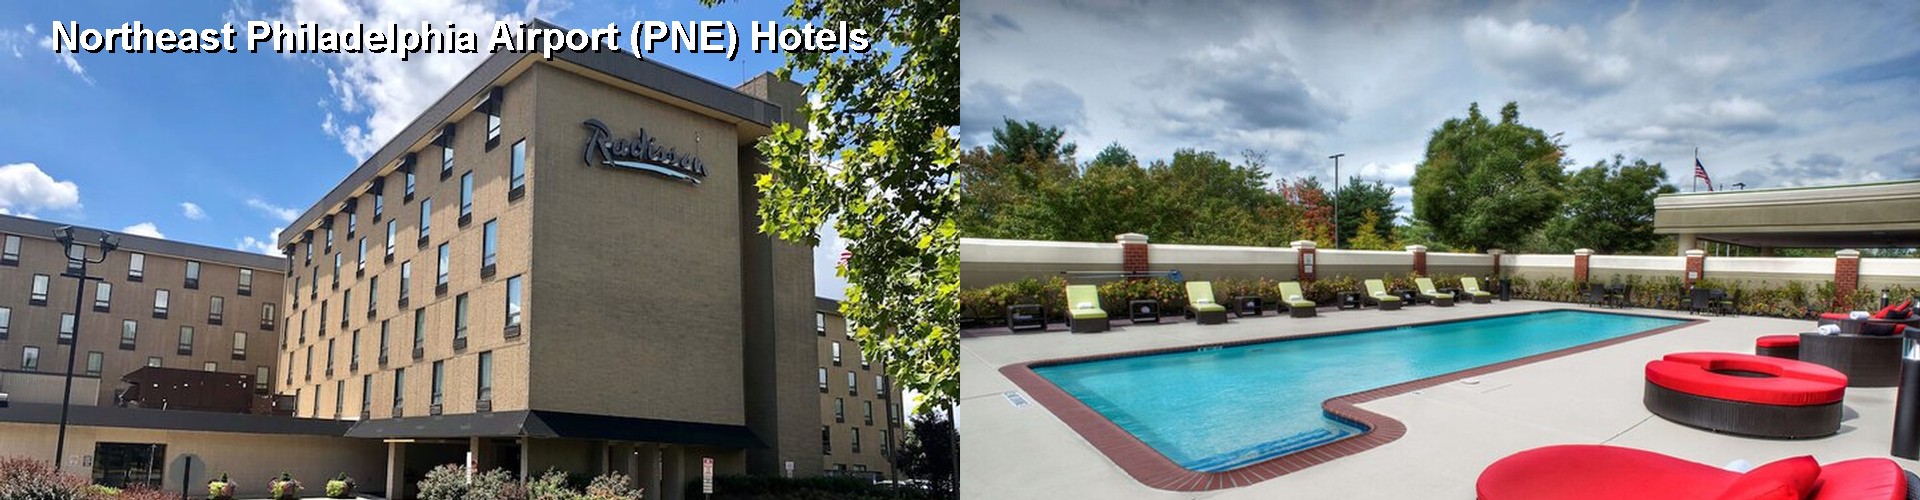 3 Best Hotels near Northeast Philadelphia Airport (PNE)